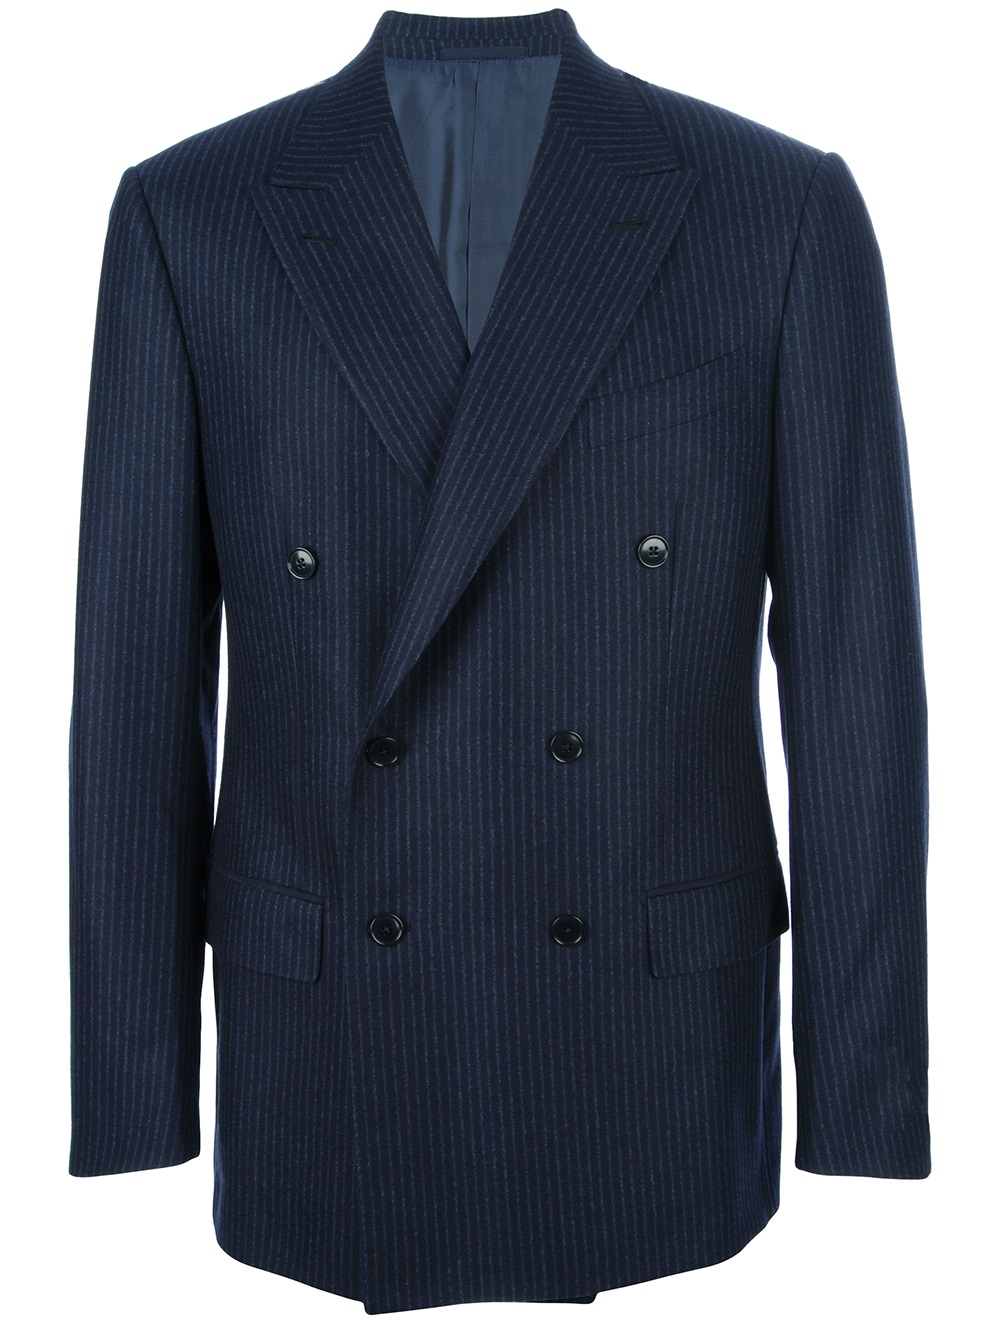 Ermenegildo Zegna Double Breasted Pinstripe Suit in Blue for Men - Lyst